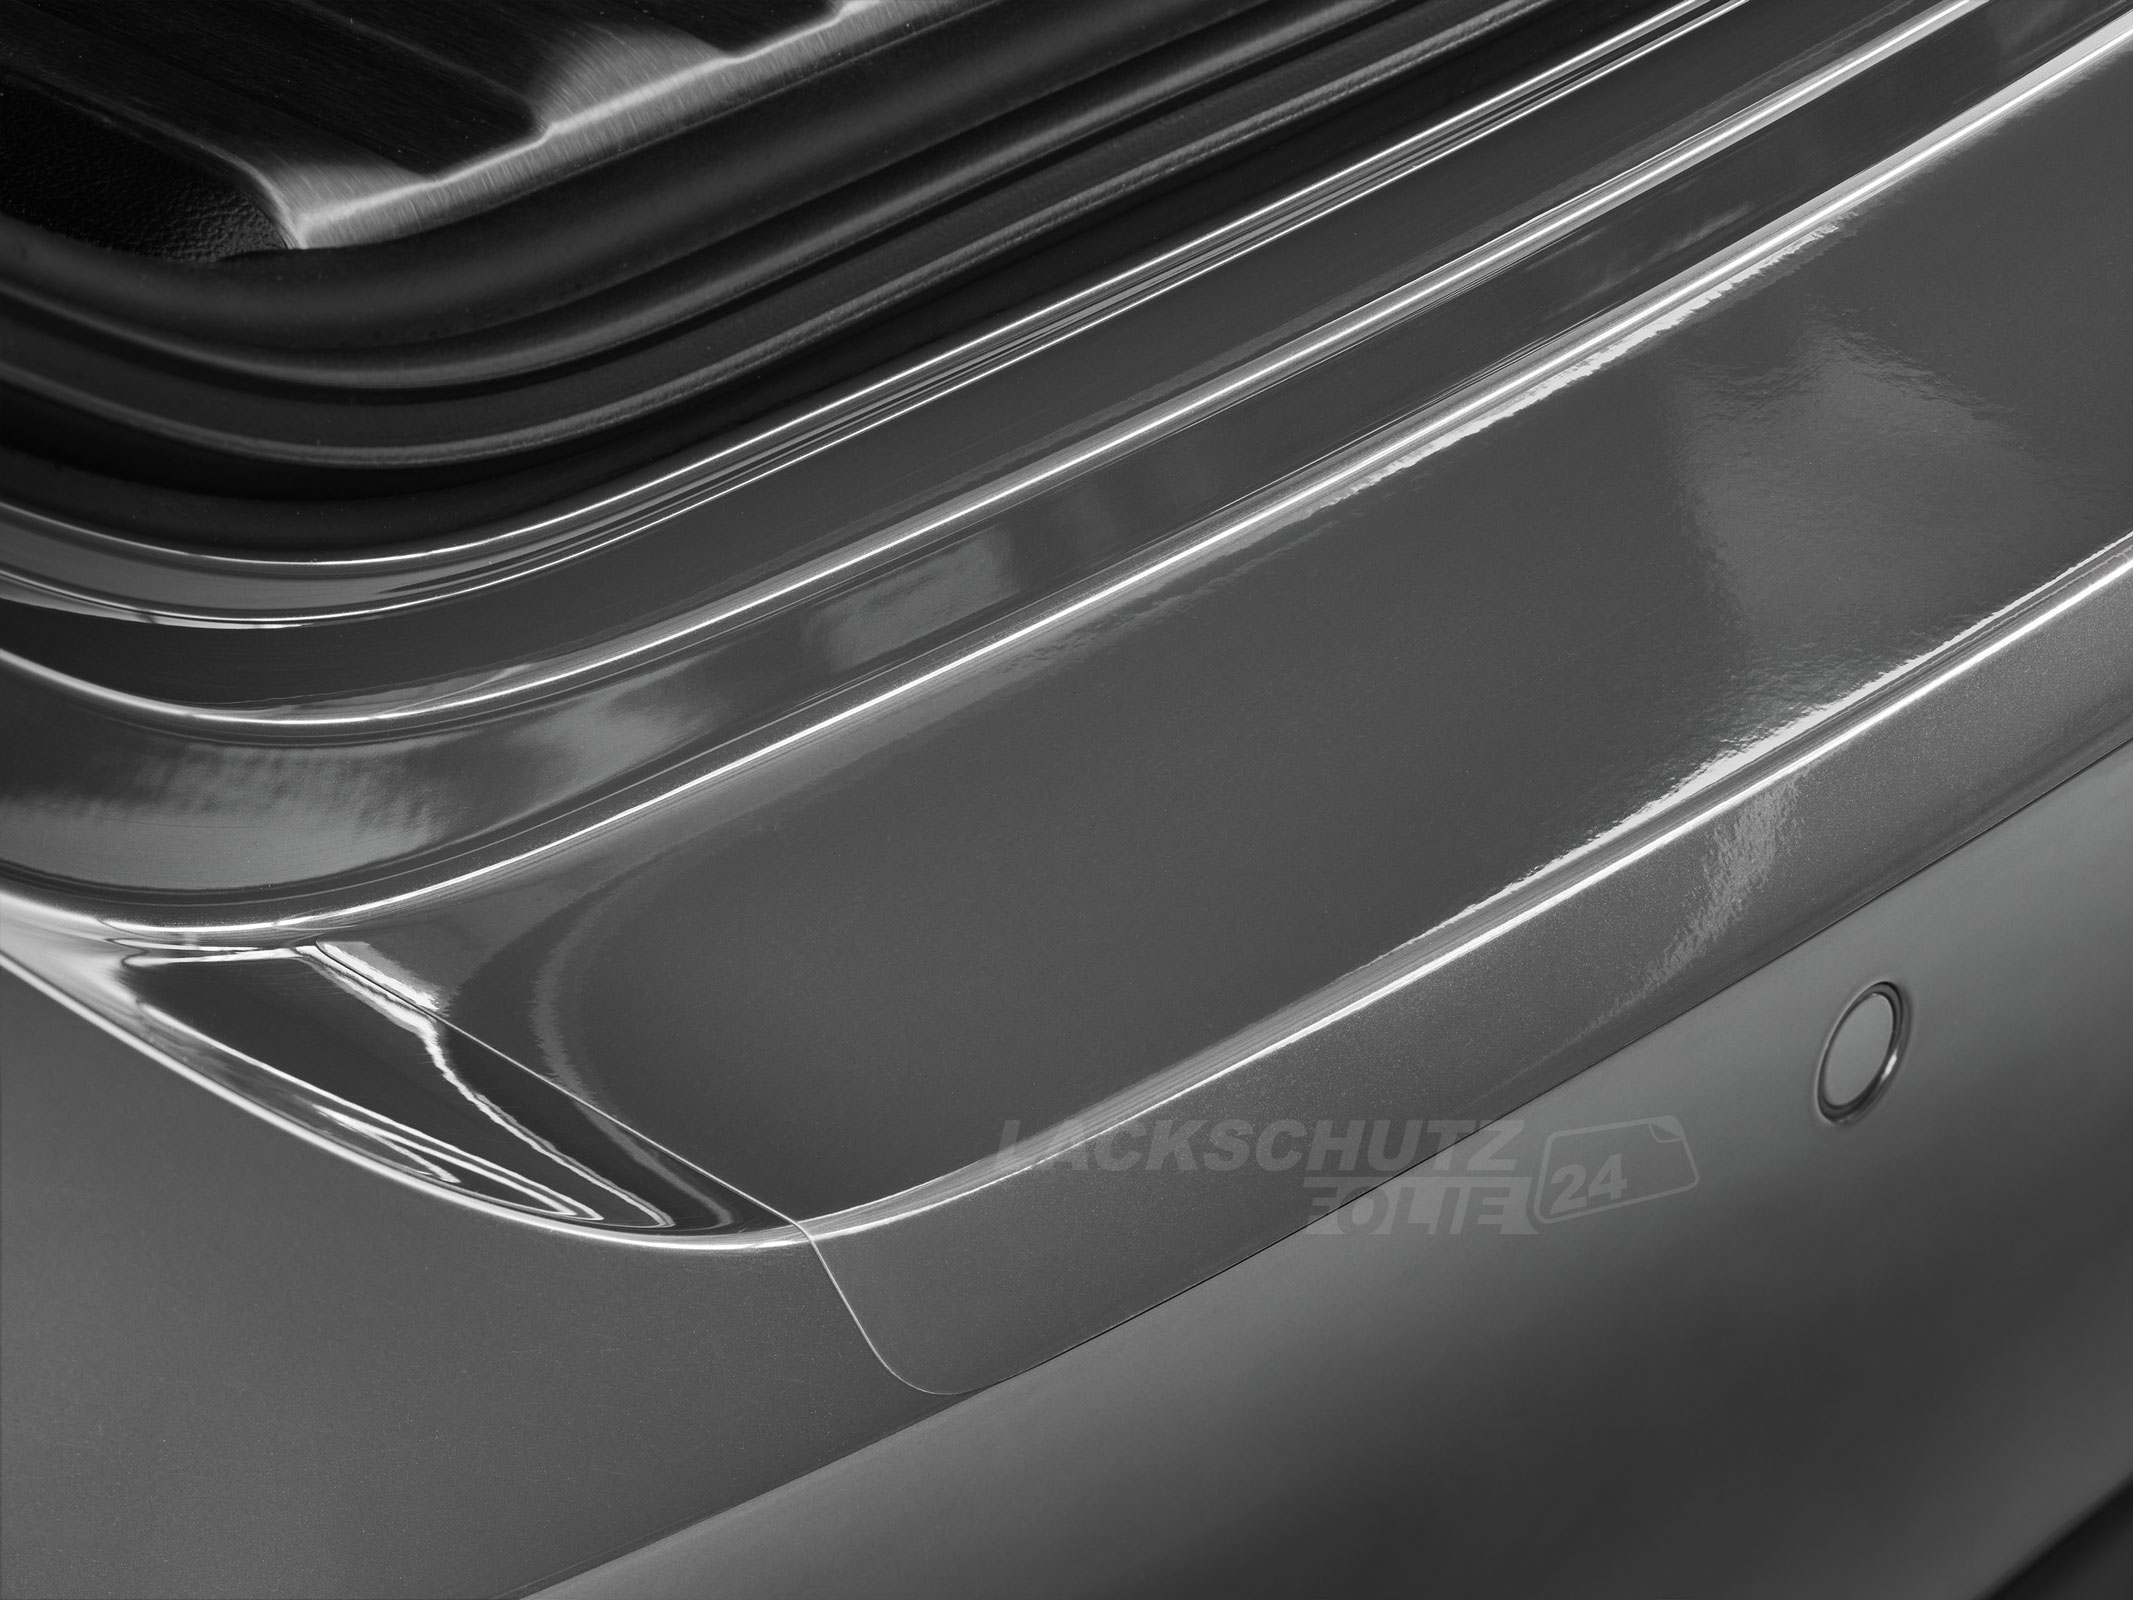 Ladekantenschutzfolie - Transparent Glatt Hochglänzend 150 µm stark für Hyundai i20 (II) Typ GB, Faceliftmodell, BJ 2018-2020